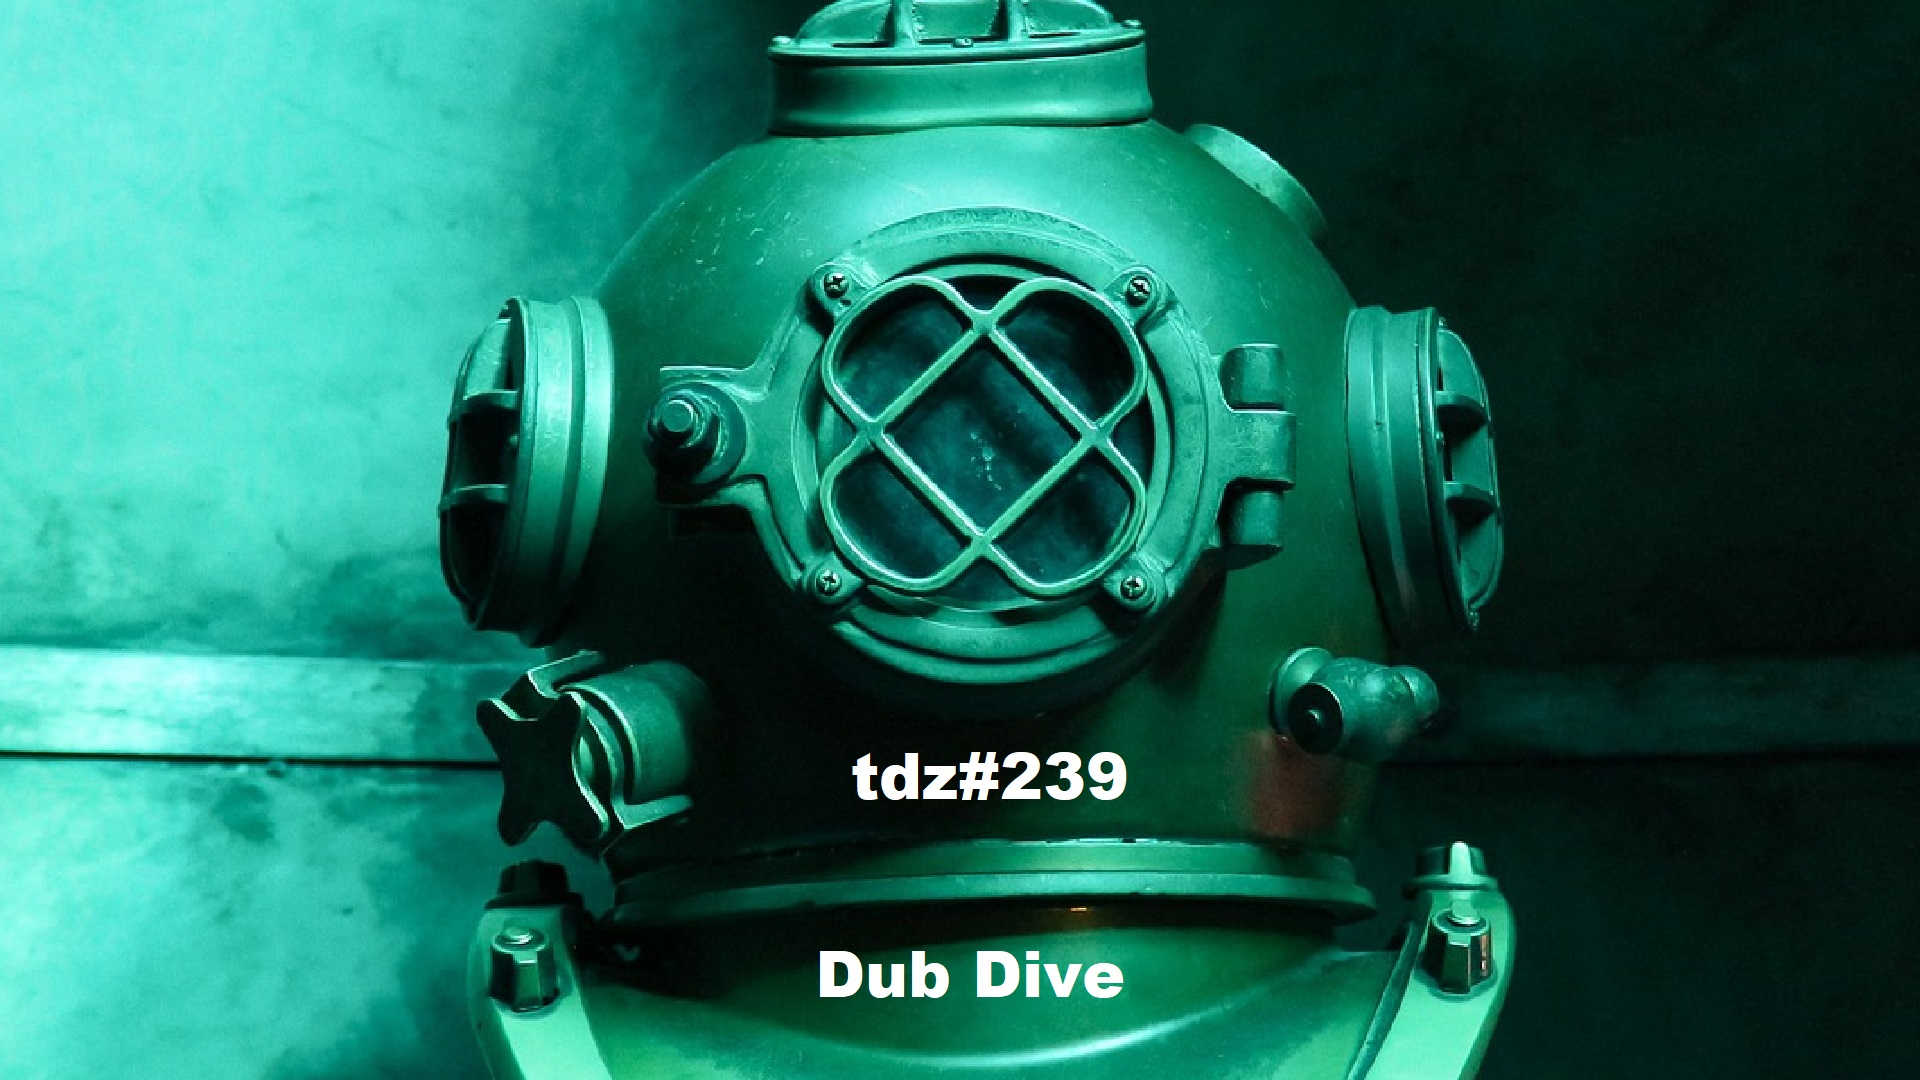 TDZ#239... Dub Dive.....